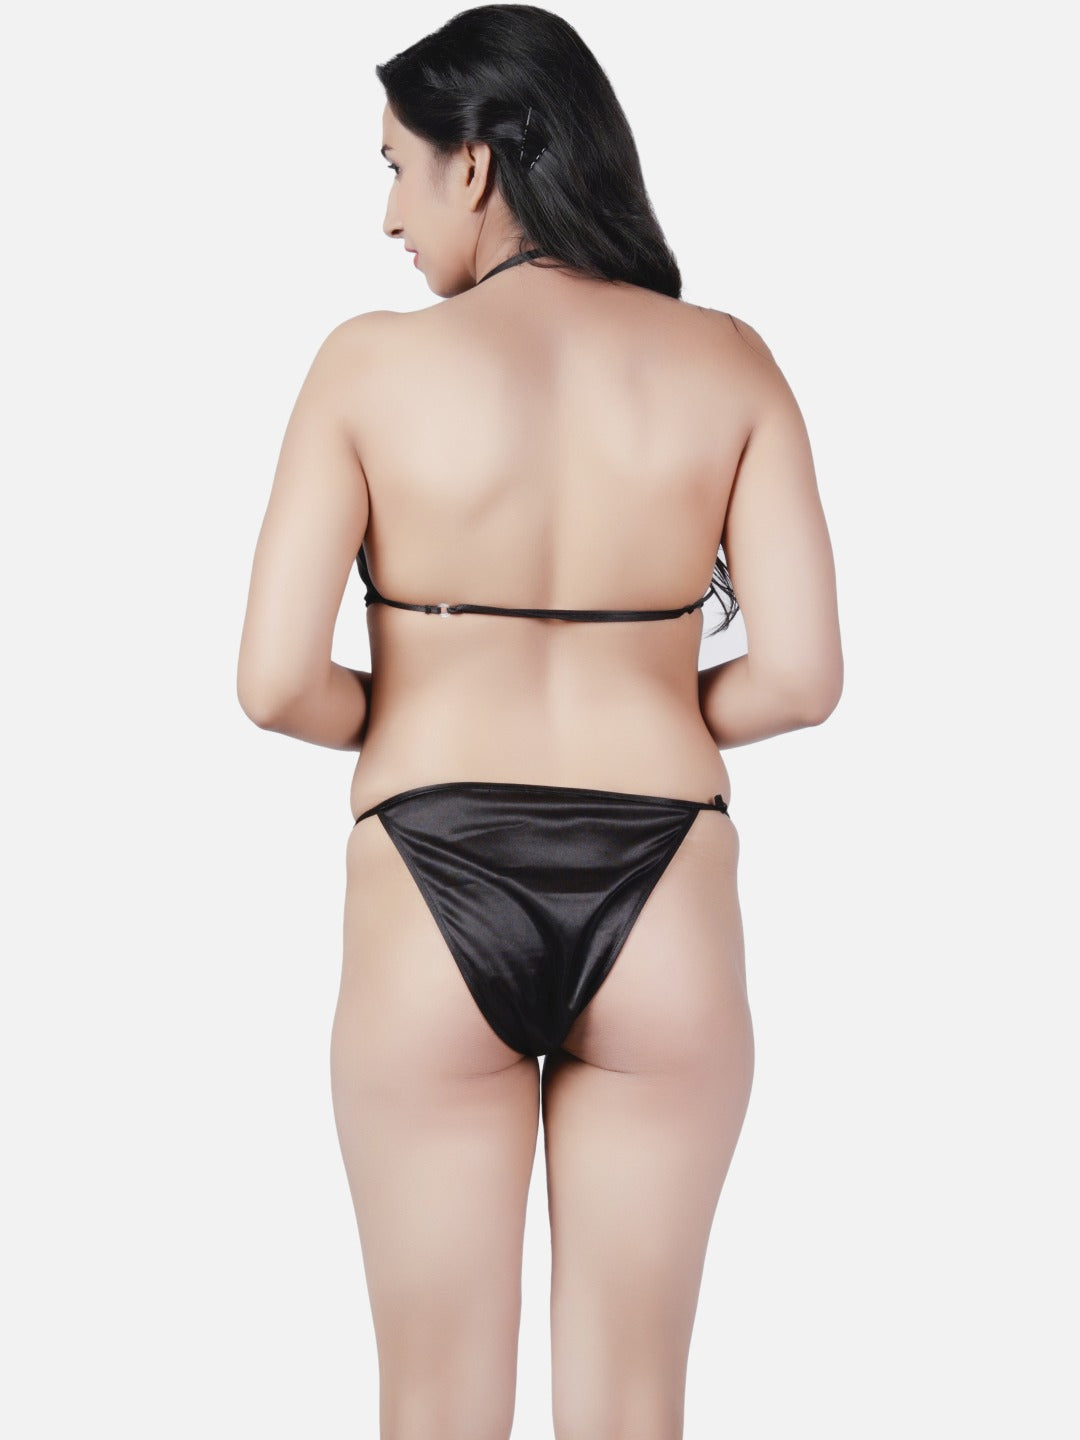 Women's Sexy Black Honeymoon Bikini Set